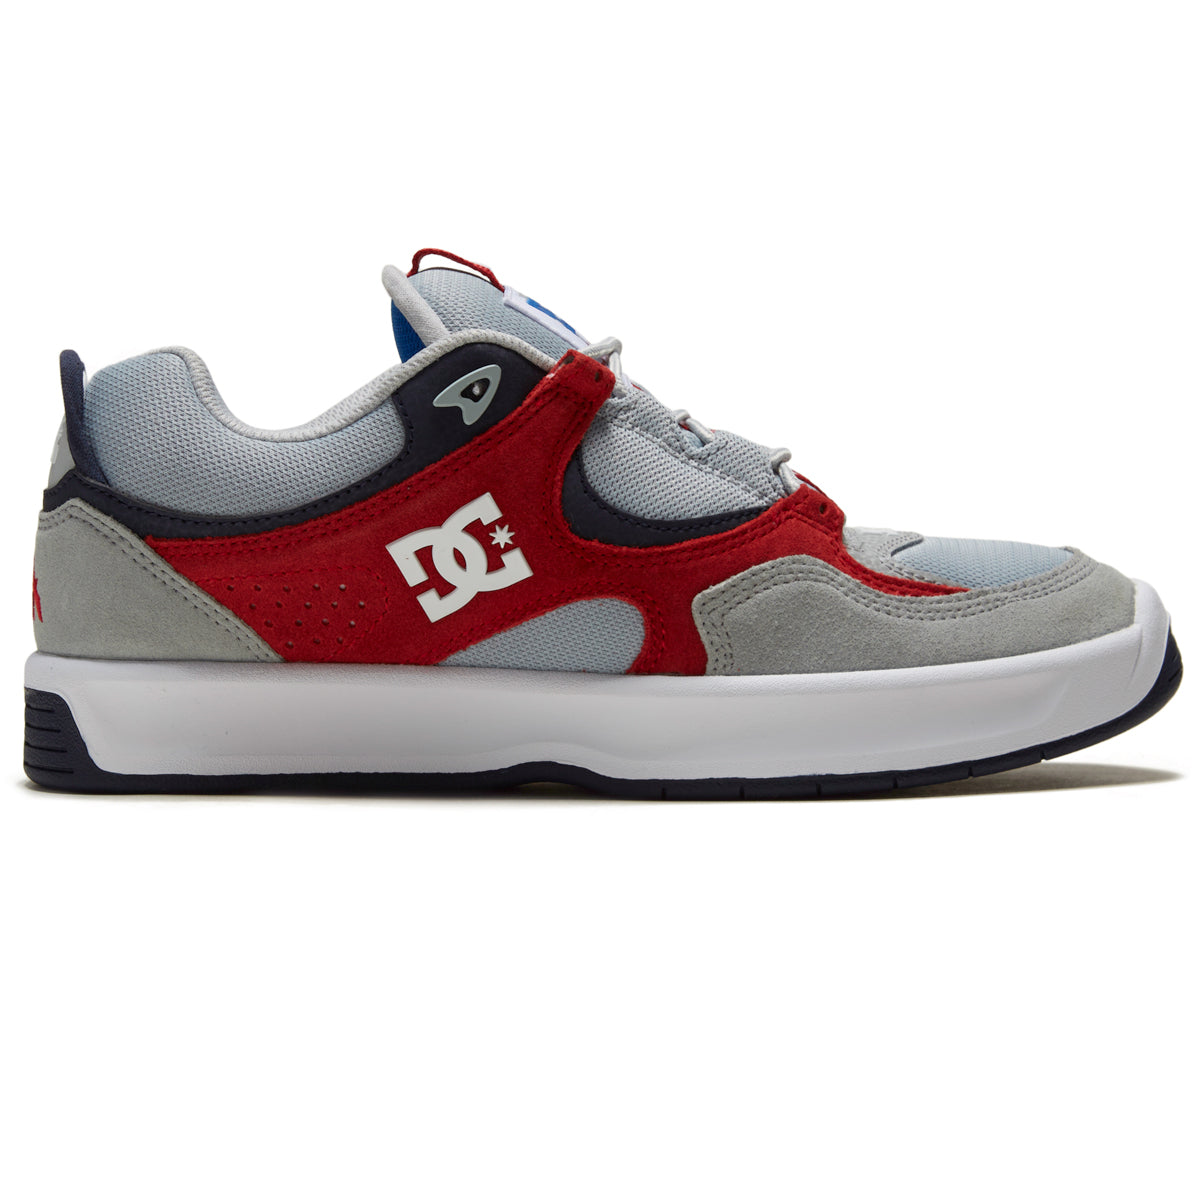 DC Kalynx Zero S Shoes - Grey/Red image 1